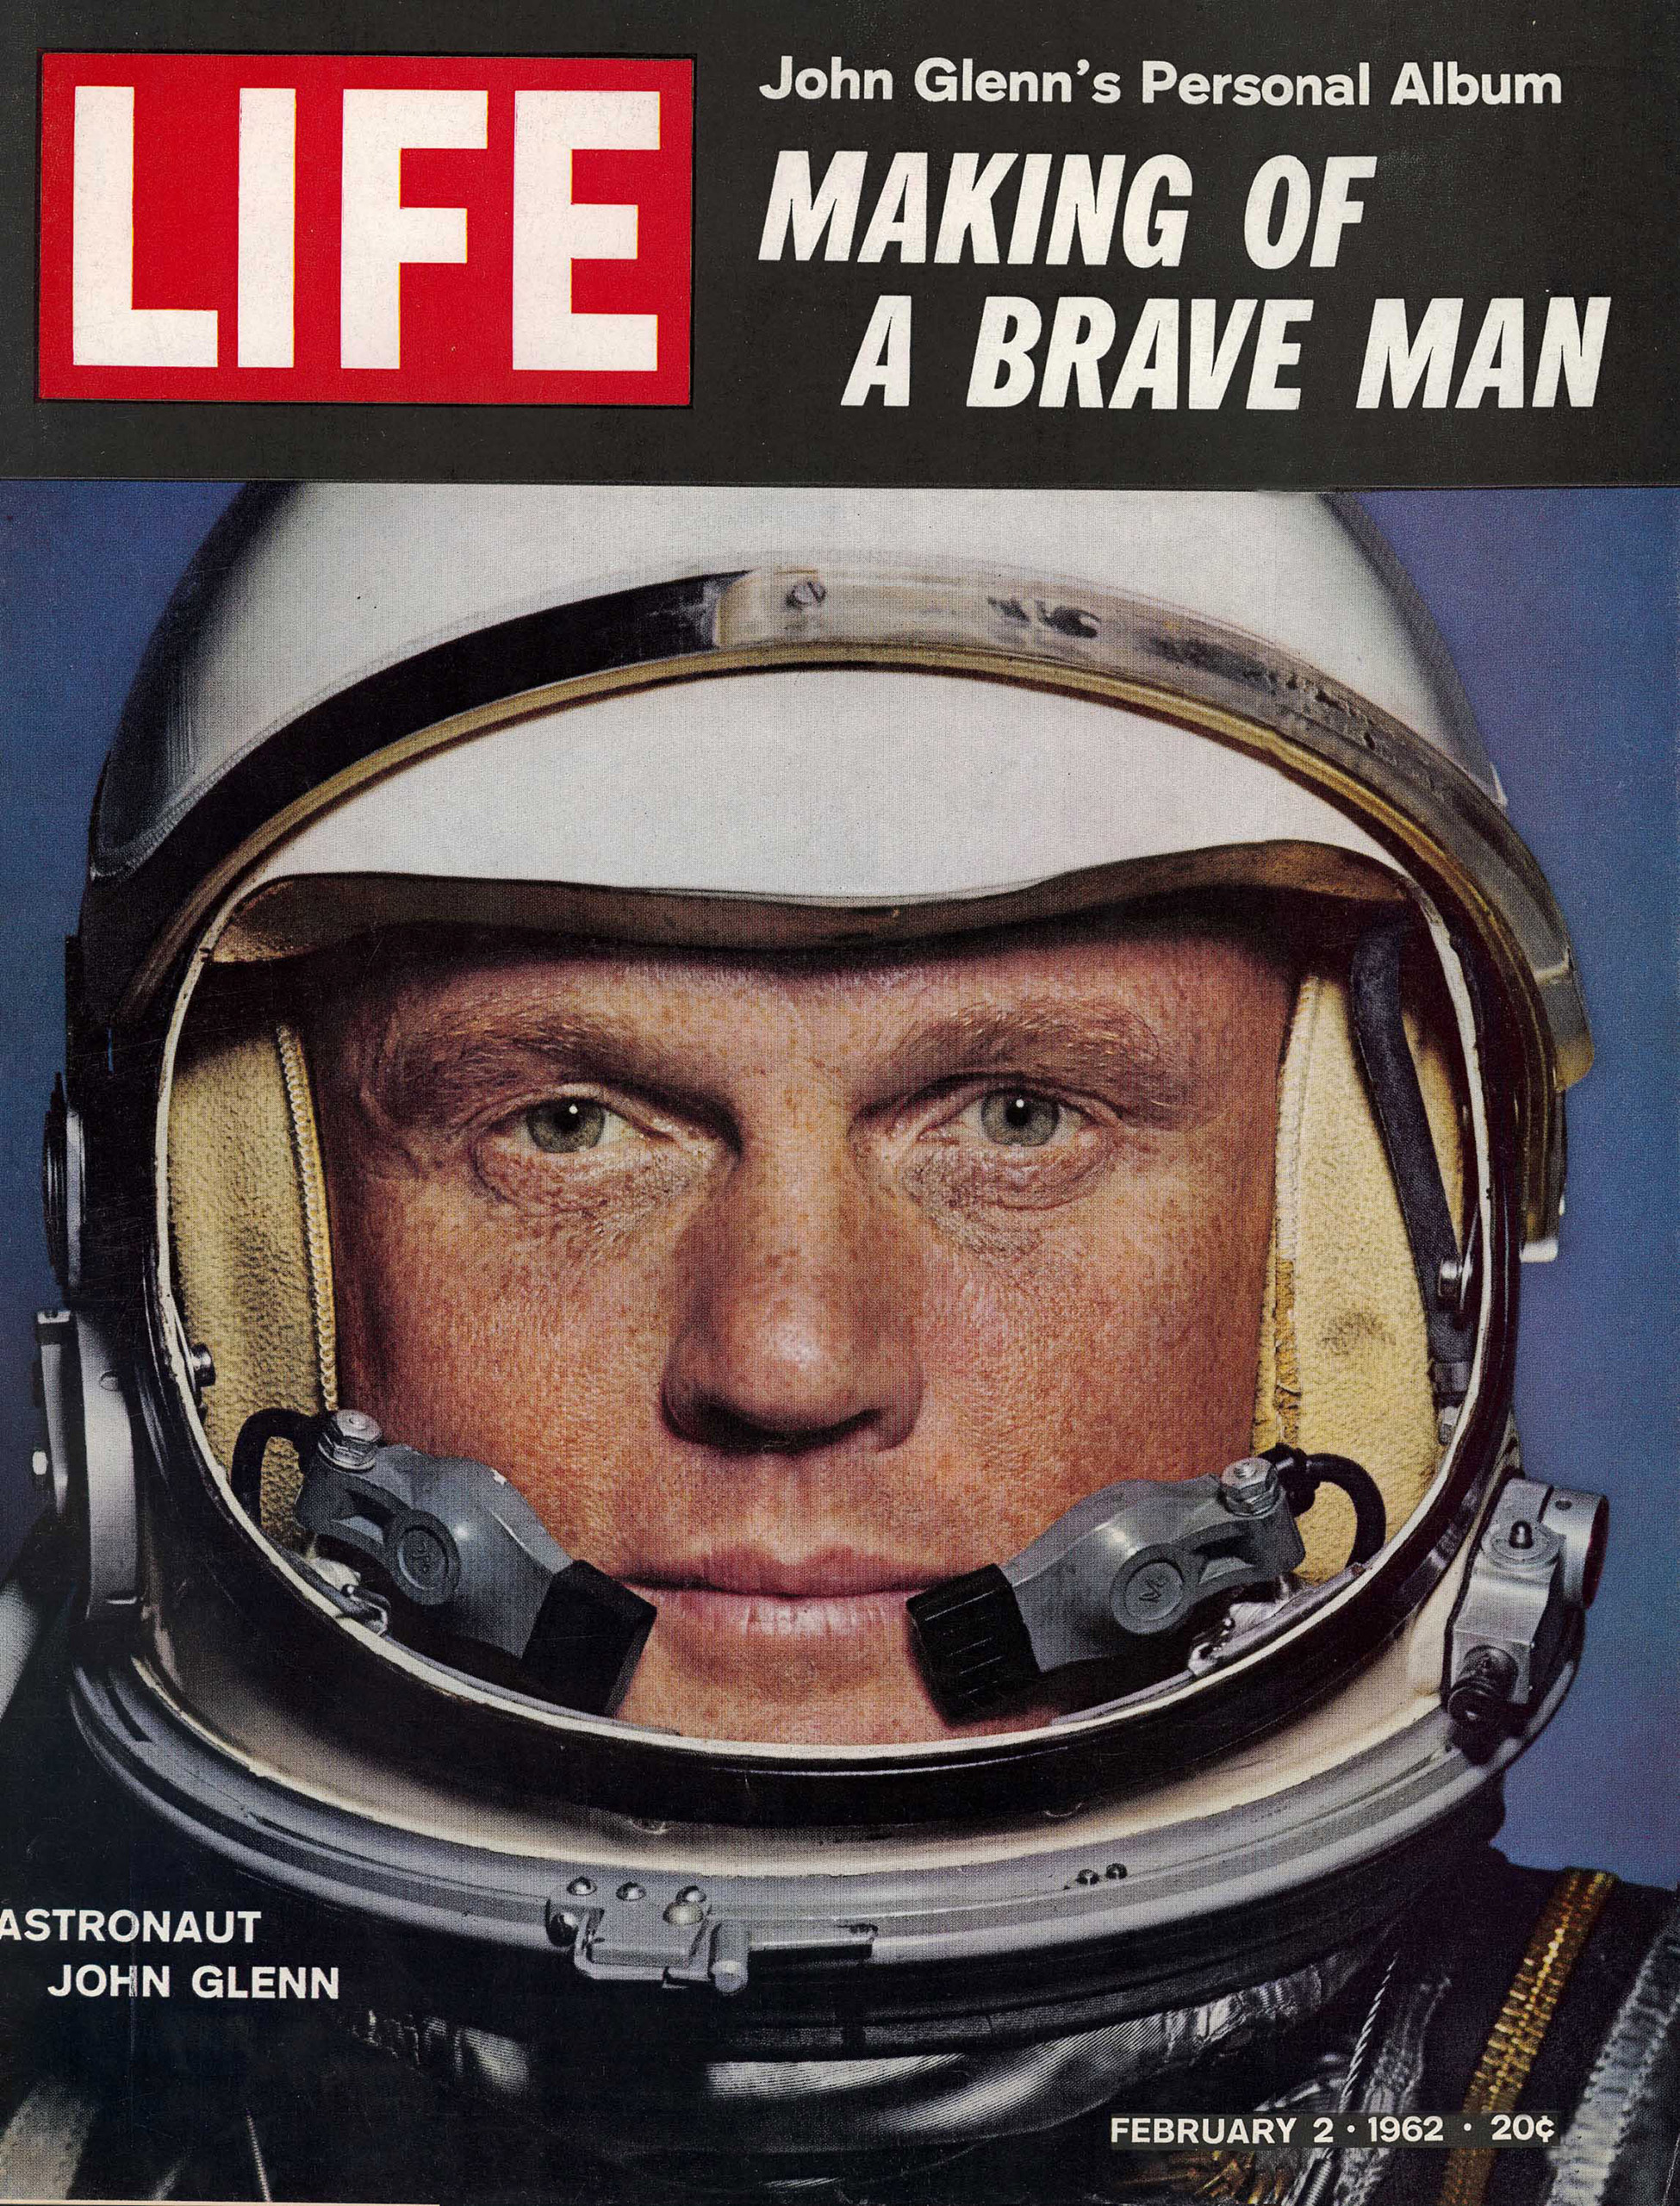 Feb.2, 1962 cover of LIFE magazine— astronaut John Glenn, "Making of a Brave Man."